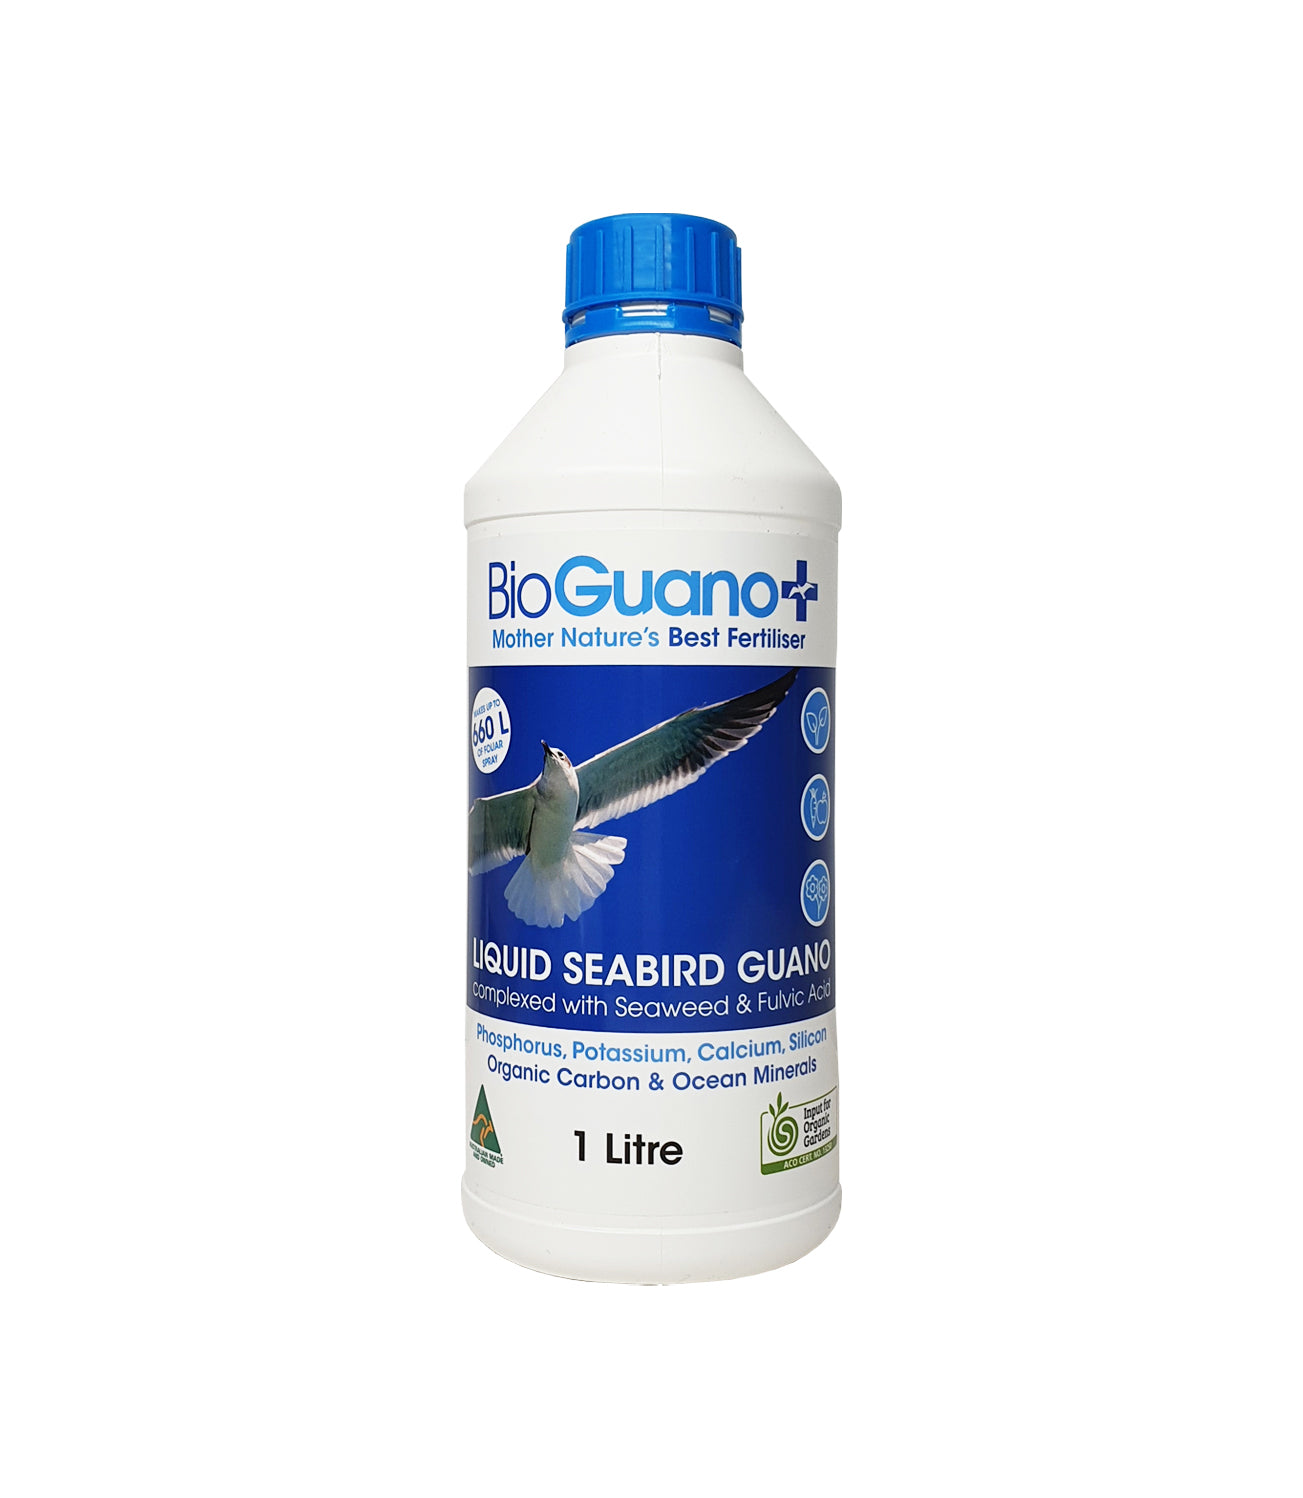 BioGuano+ (Liquid Seabird Guano)